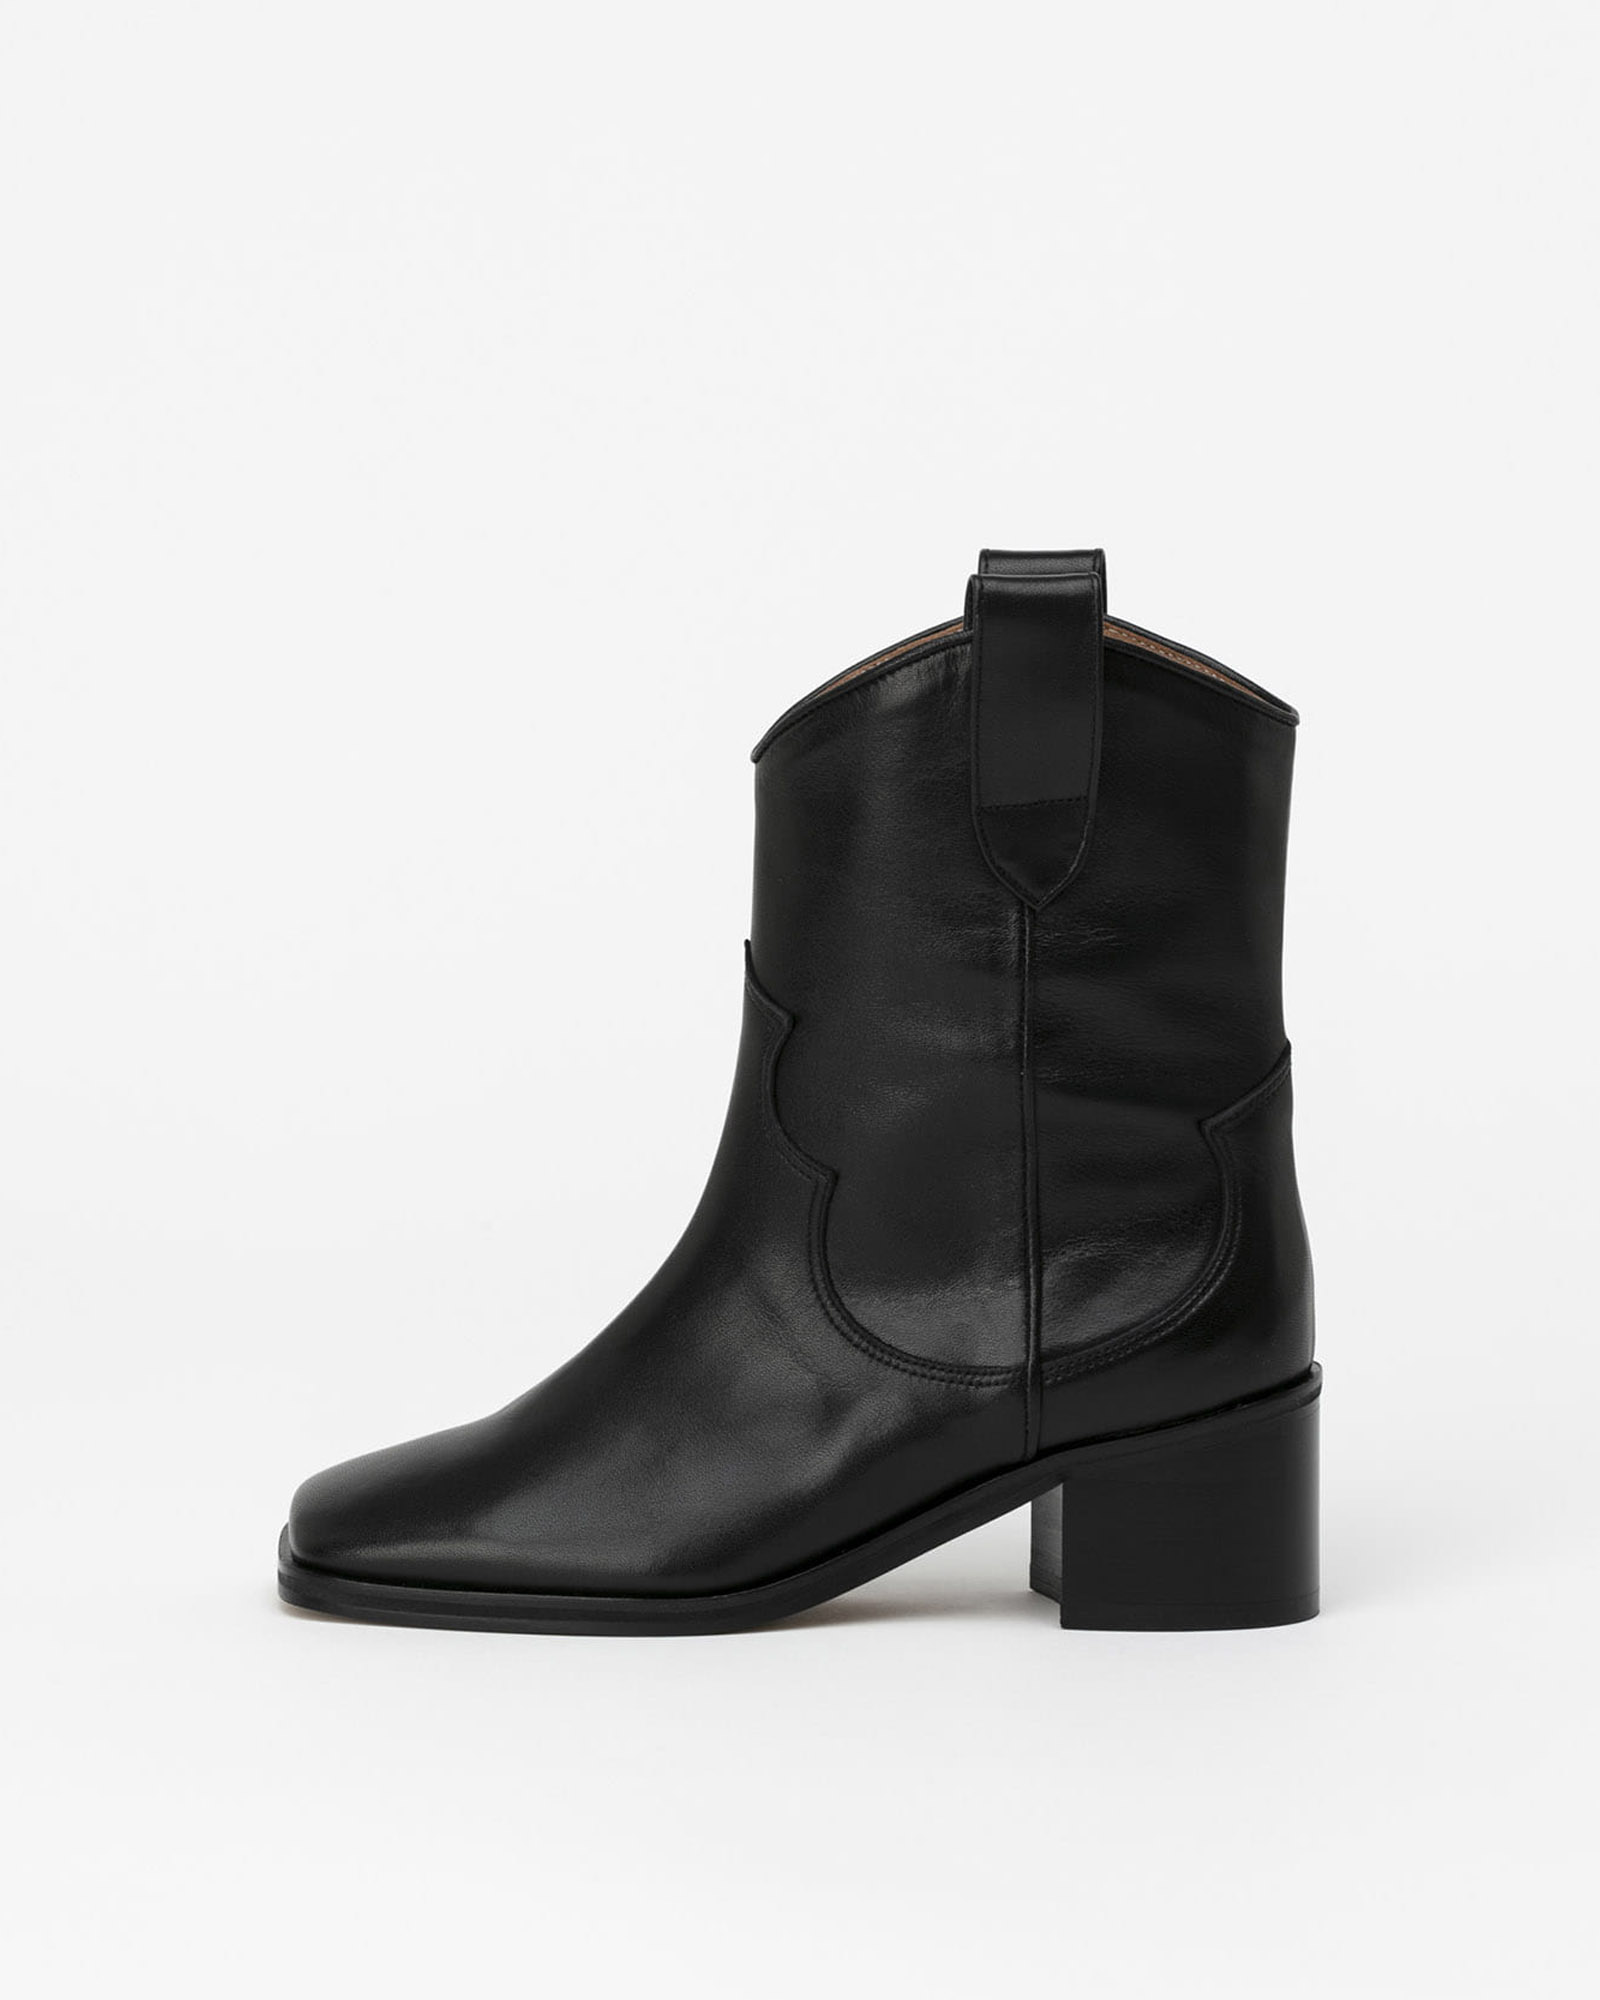 Elceta Square Toe Cowboy Boots in Black